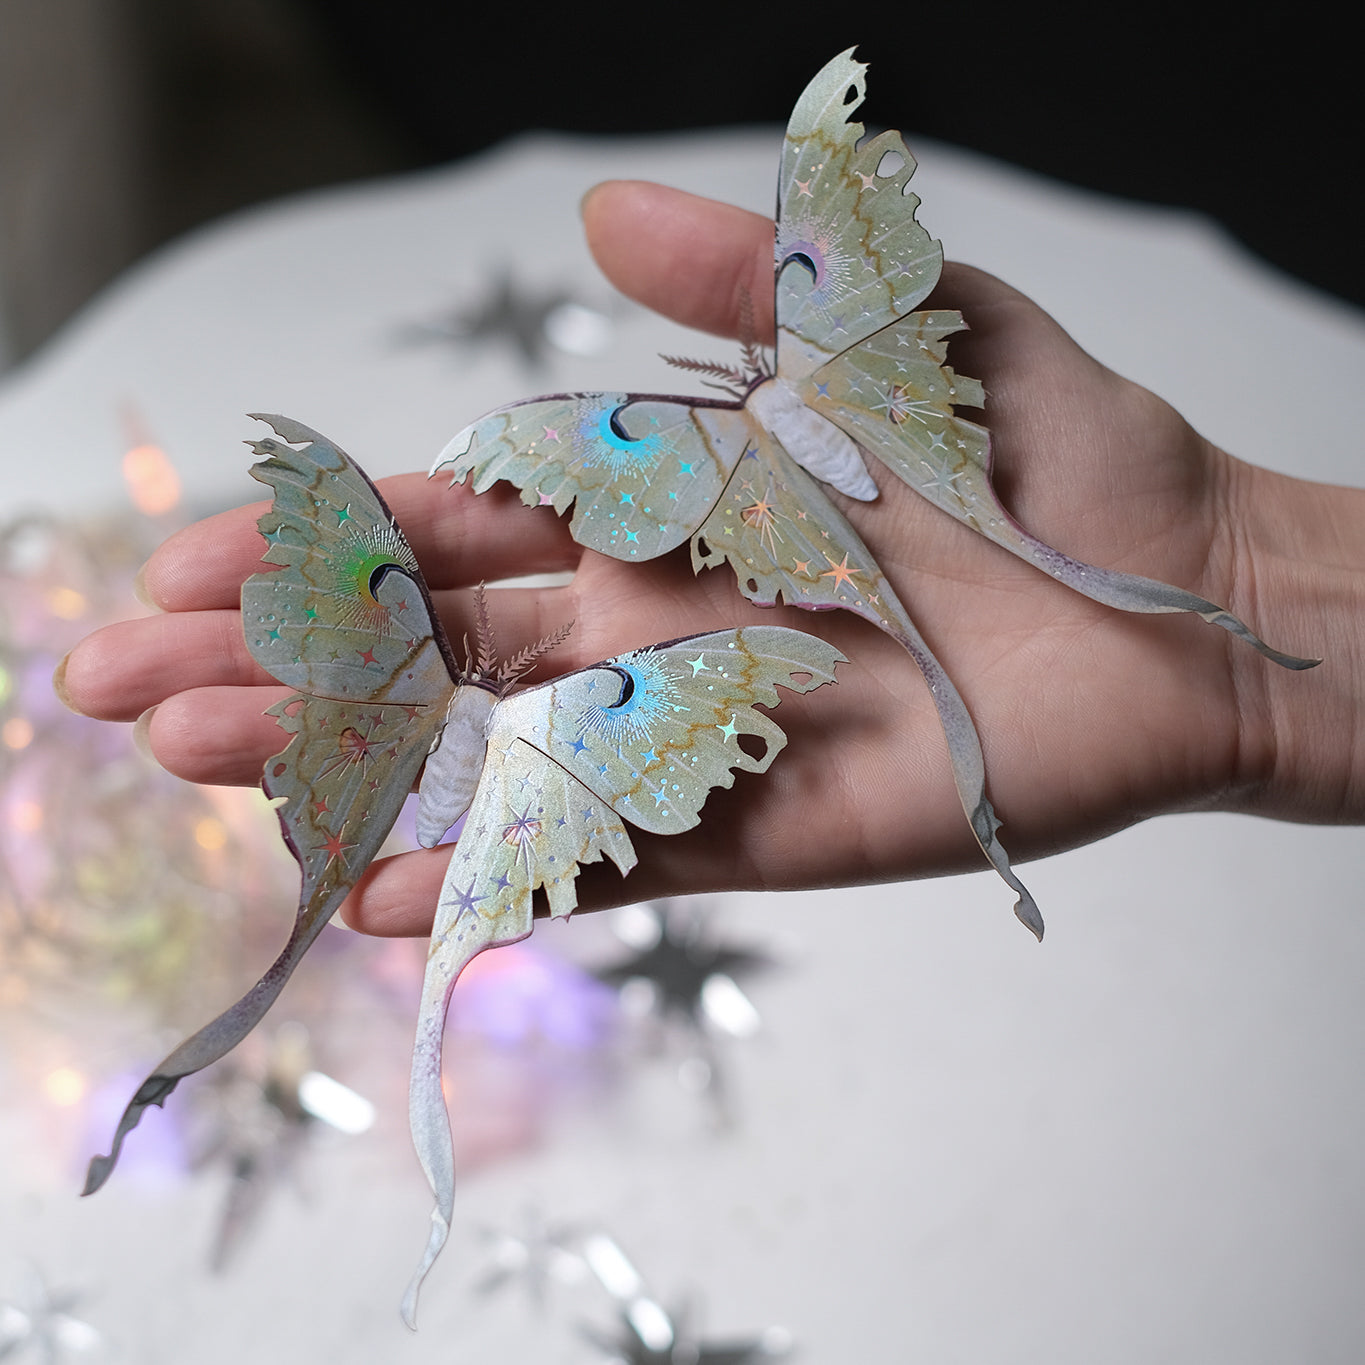 💫New💫 Celestial Beings Luna Moth Set - Artist Discount